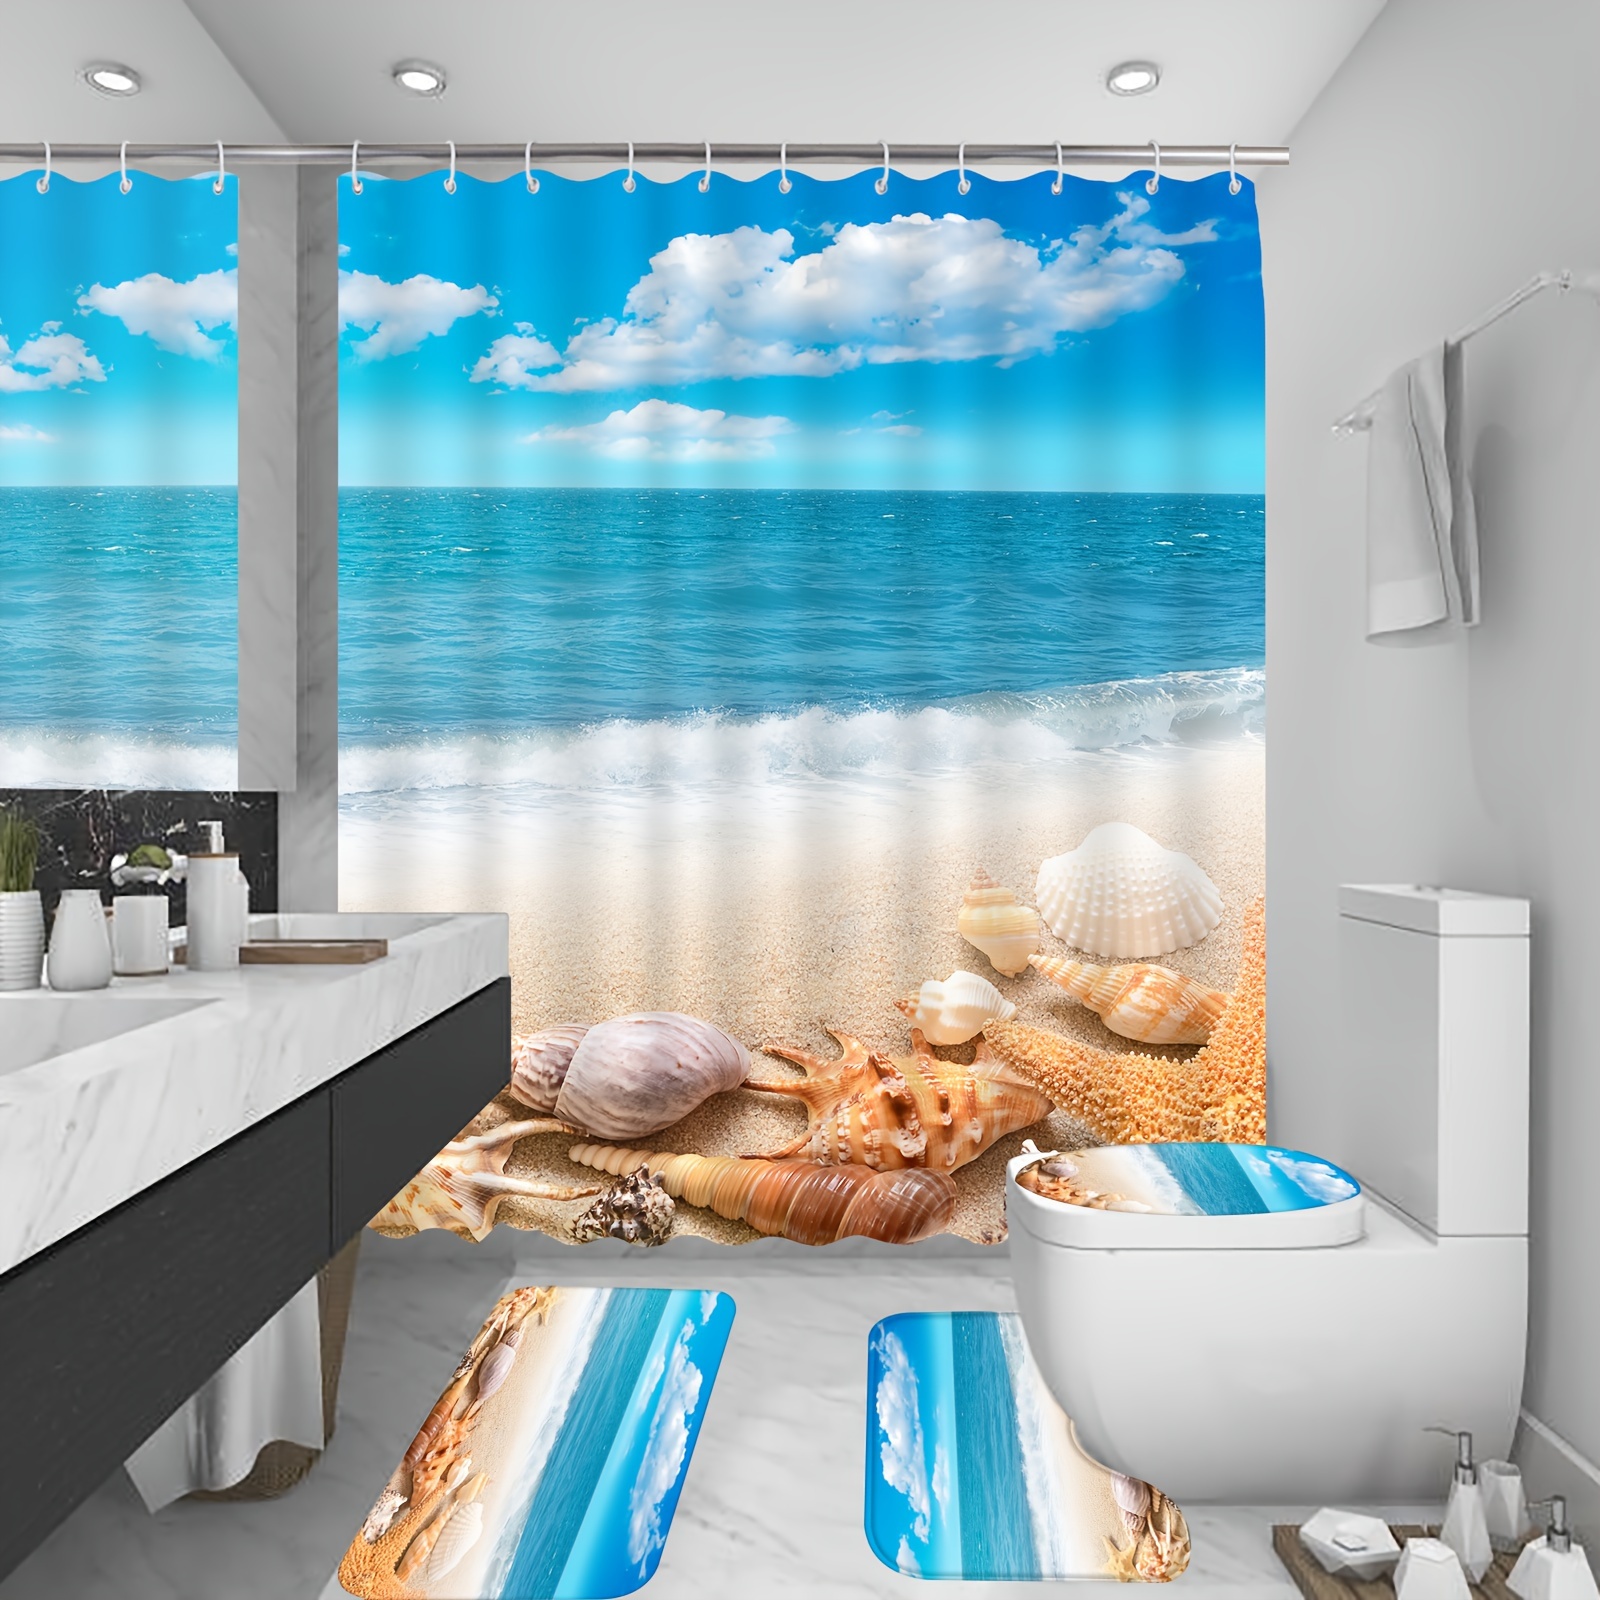 Uphome Beach Shower Curtain Aqua Seashell and India